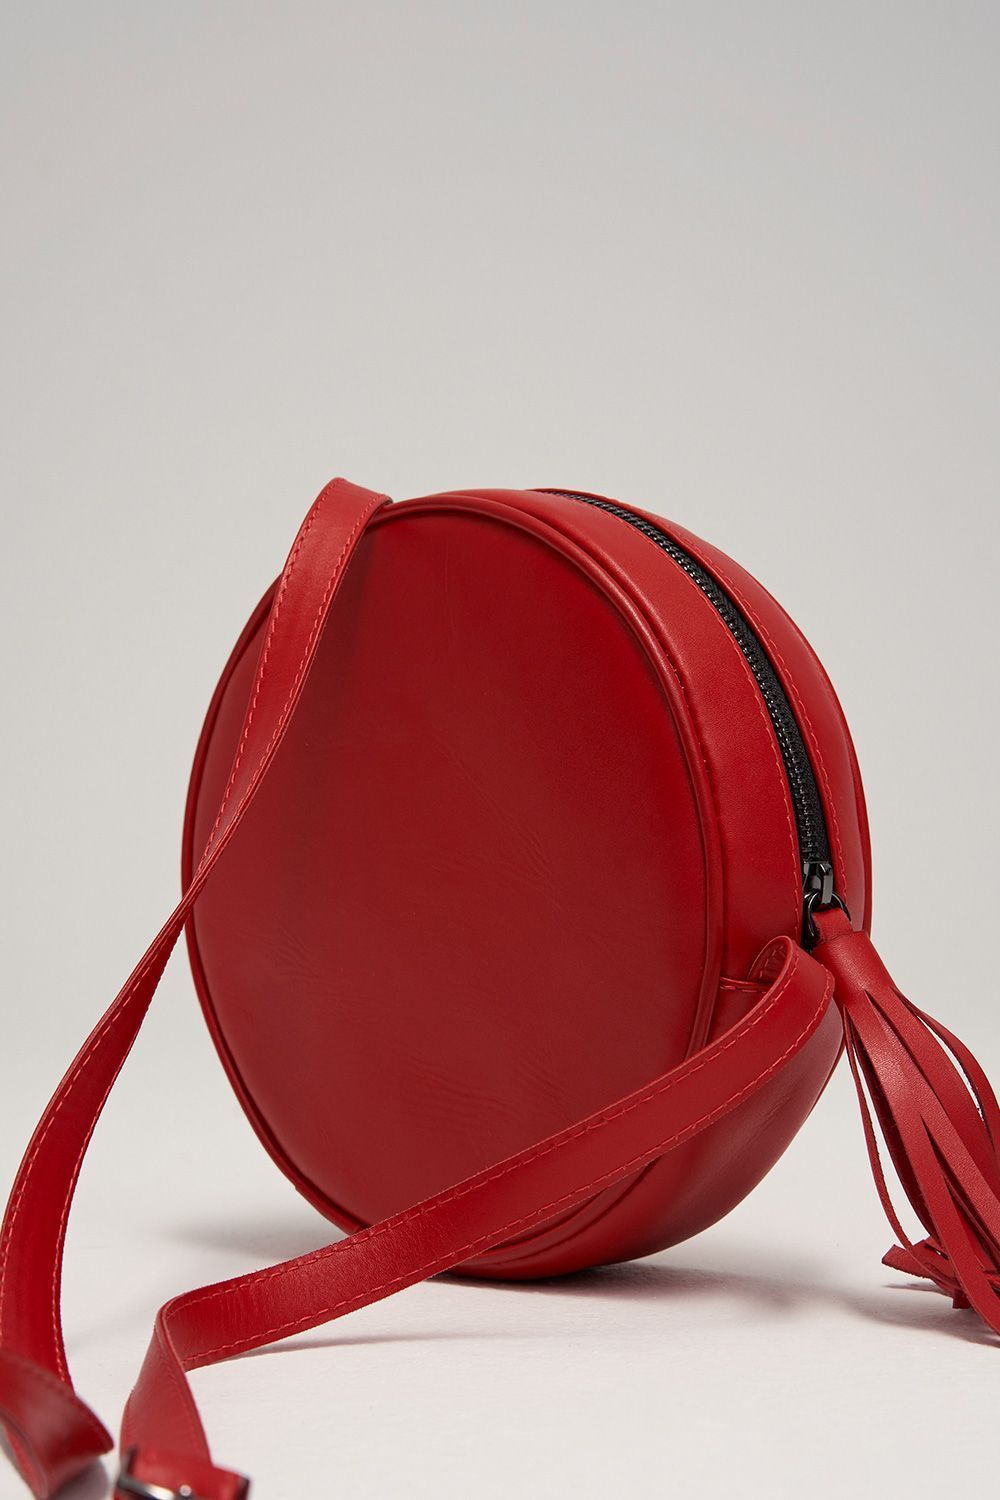 Круглая сумочка красного цвета